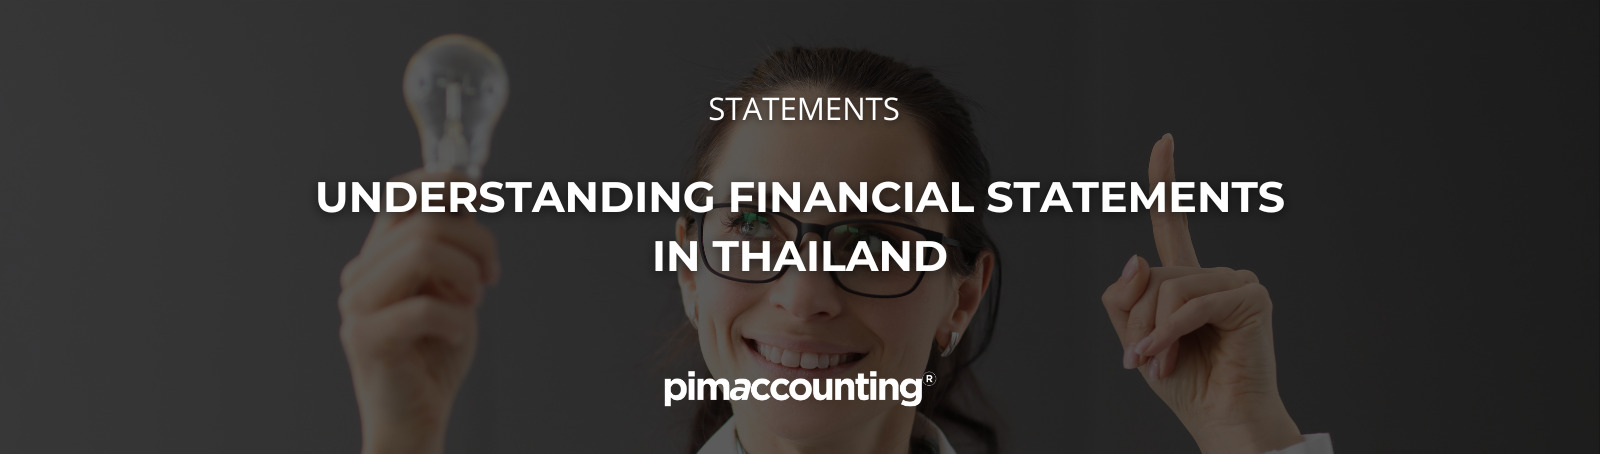 Understanding financial statements in Thailand - Pimaccounting